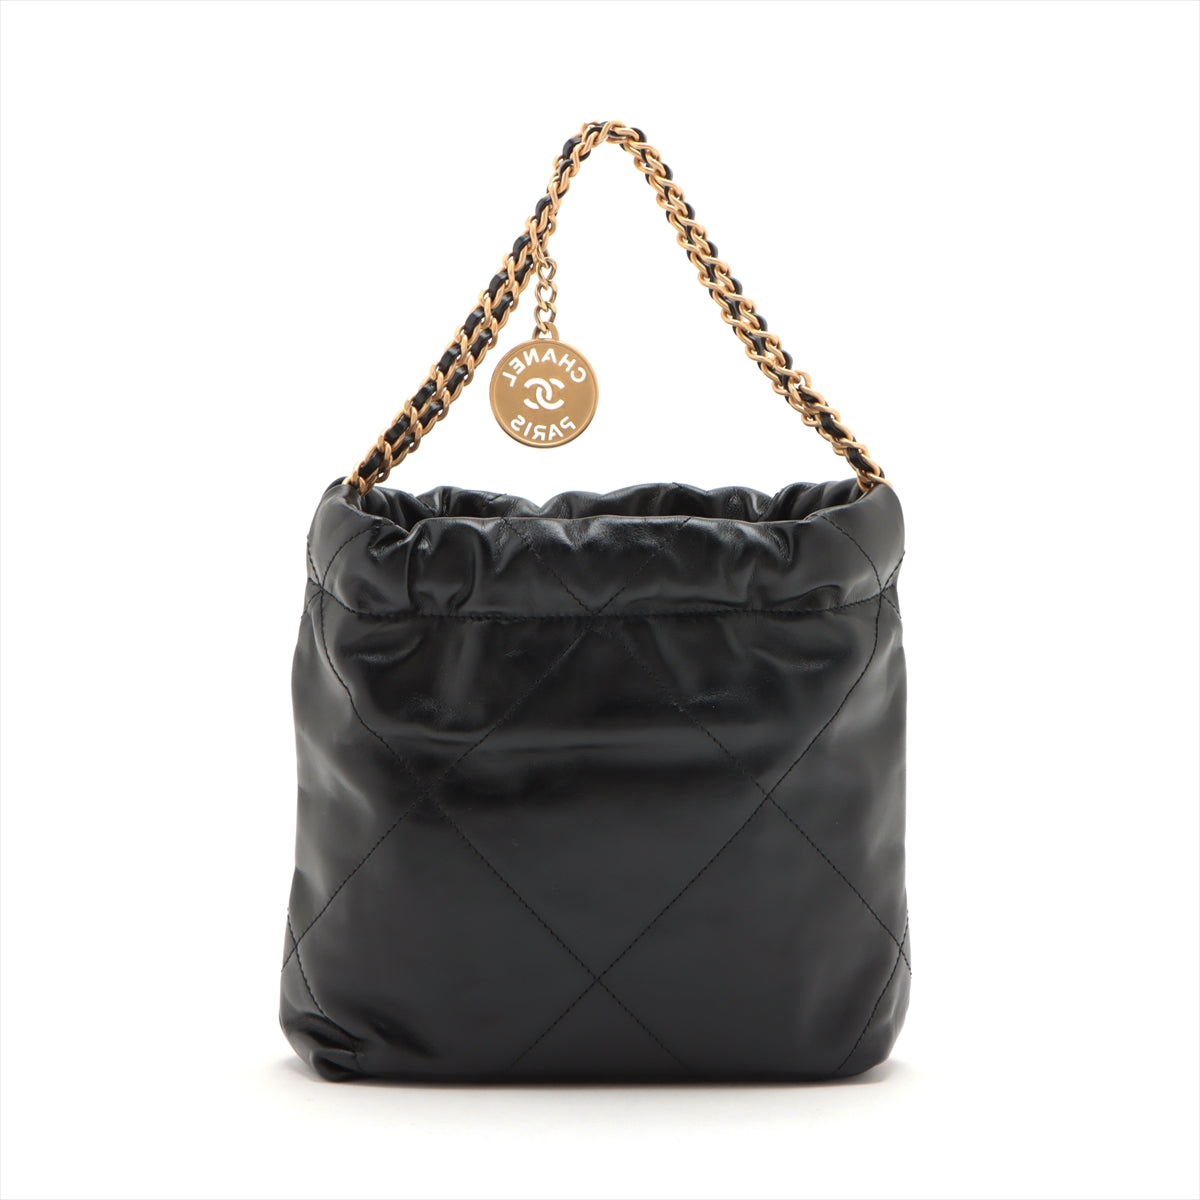 Chanel Chanel 22 mini shiny calfskin 2way shoulder bag Black Gold Metal fittings